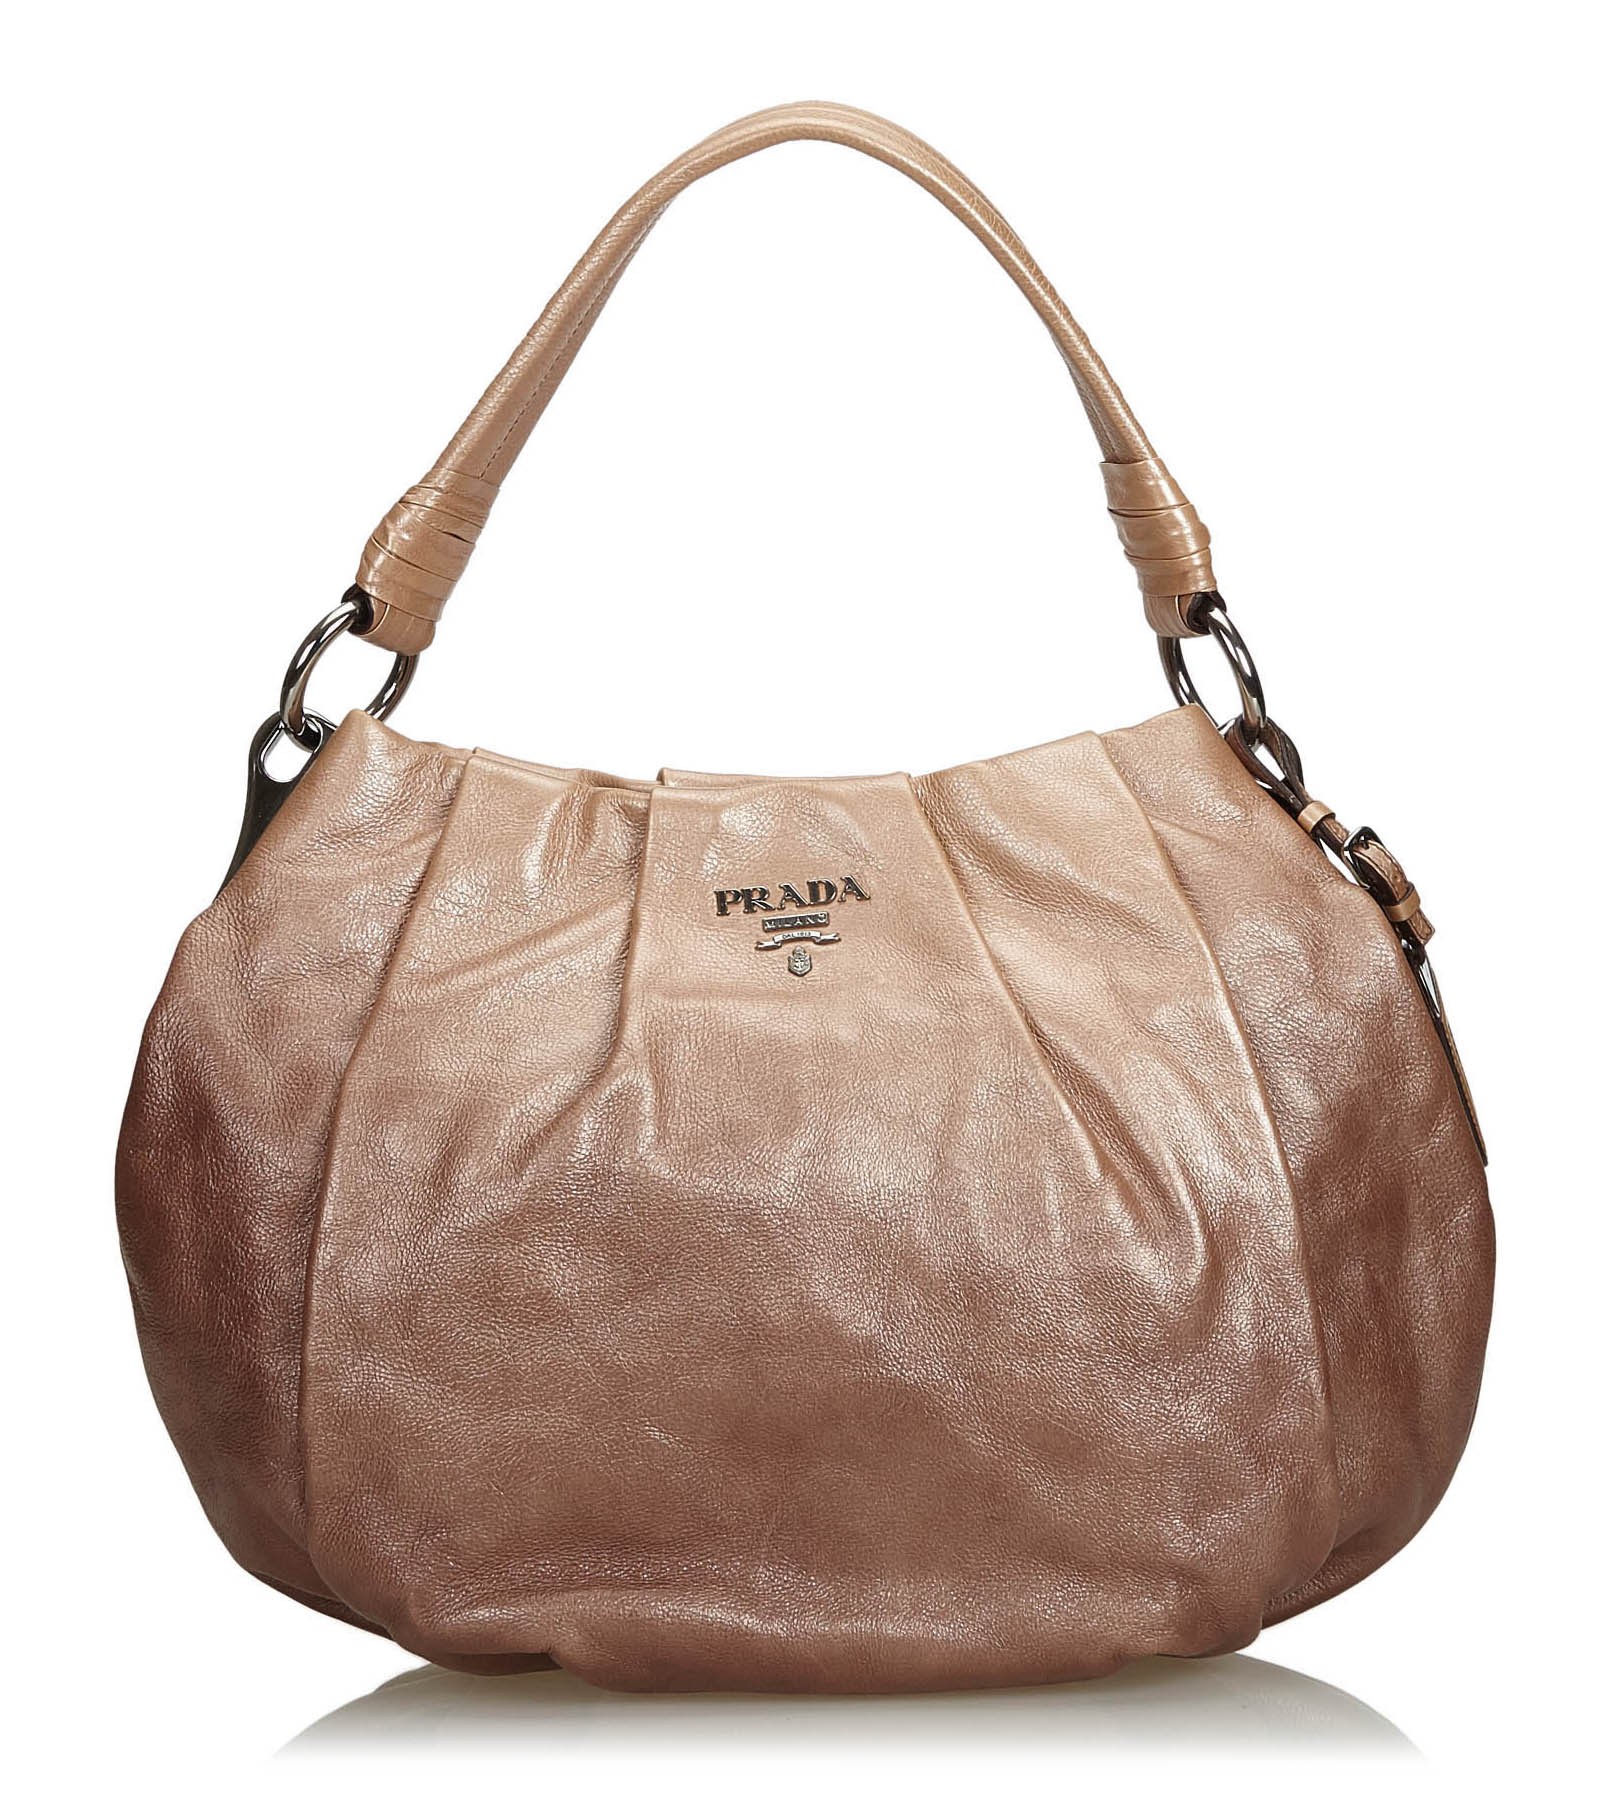 Prada Brown Leather Handbag Size 16 X 10 X 6 Vintage 